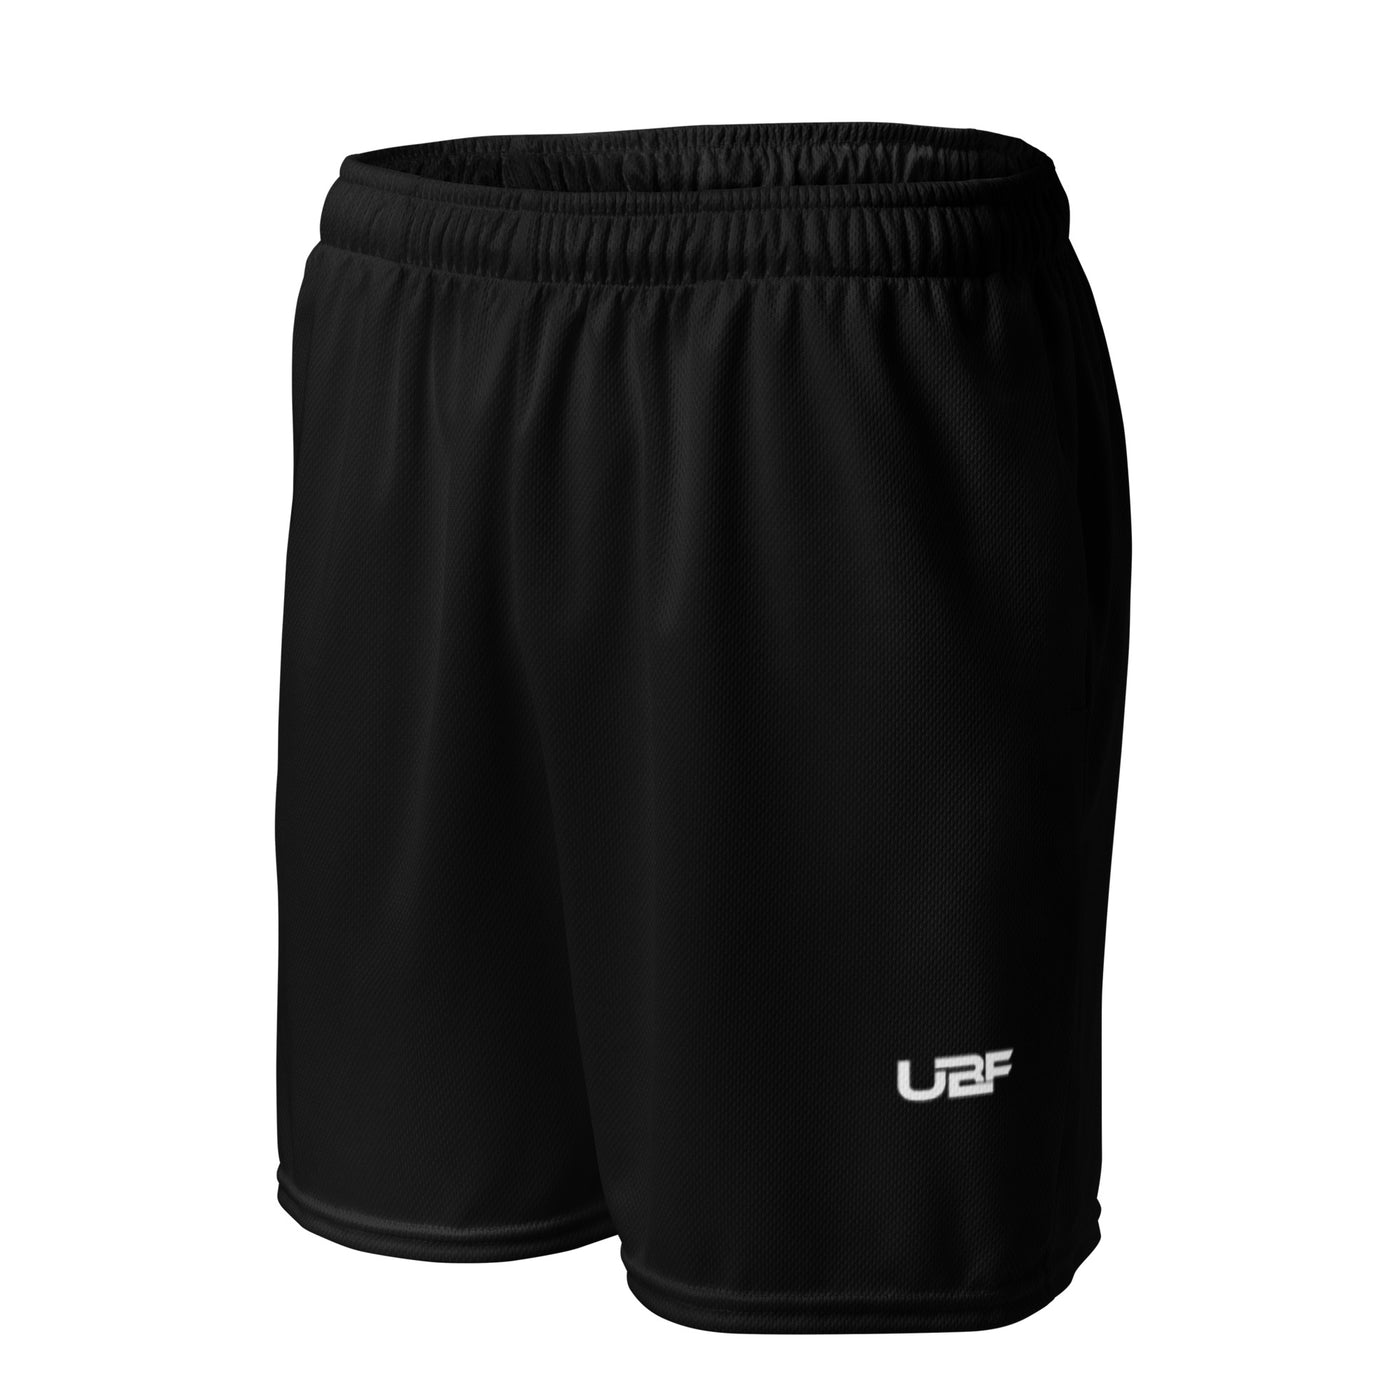 White UBF Black mesh shorts